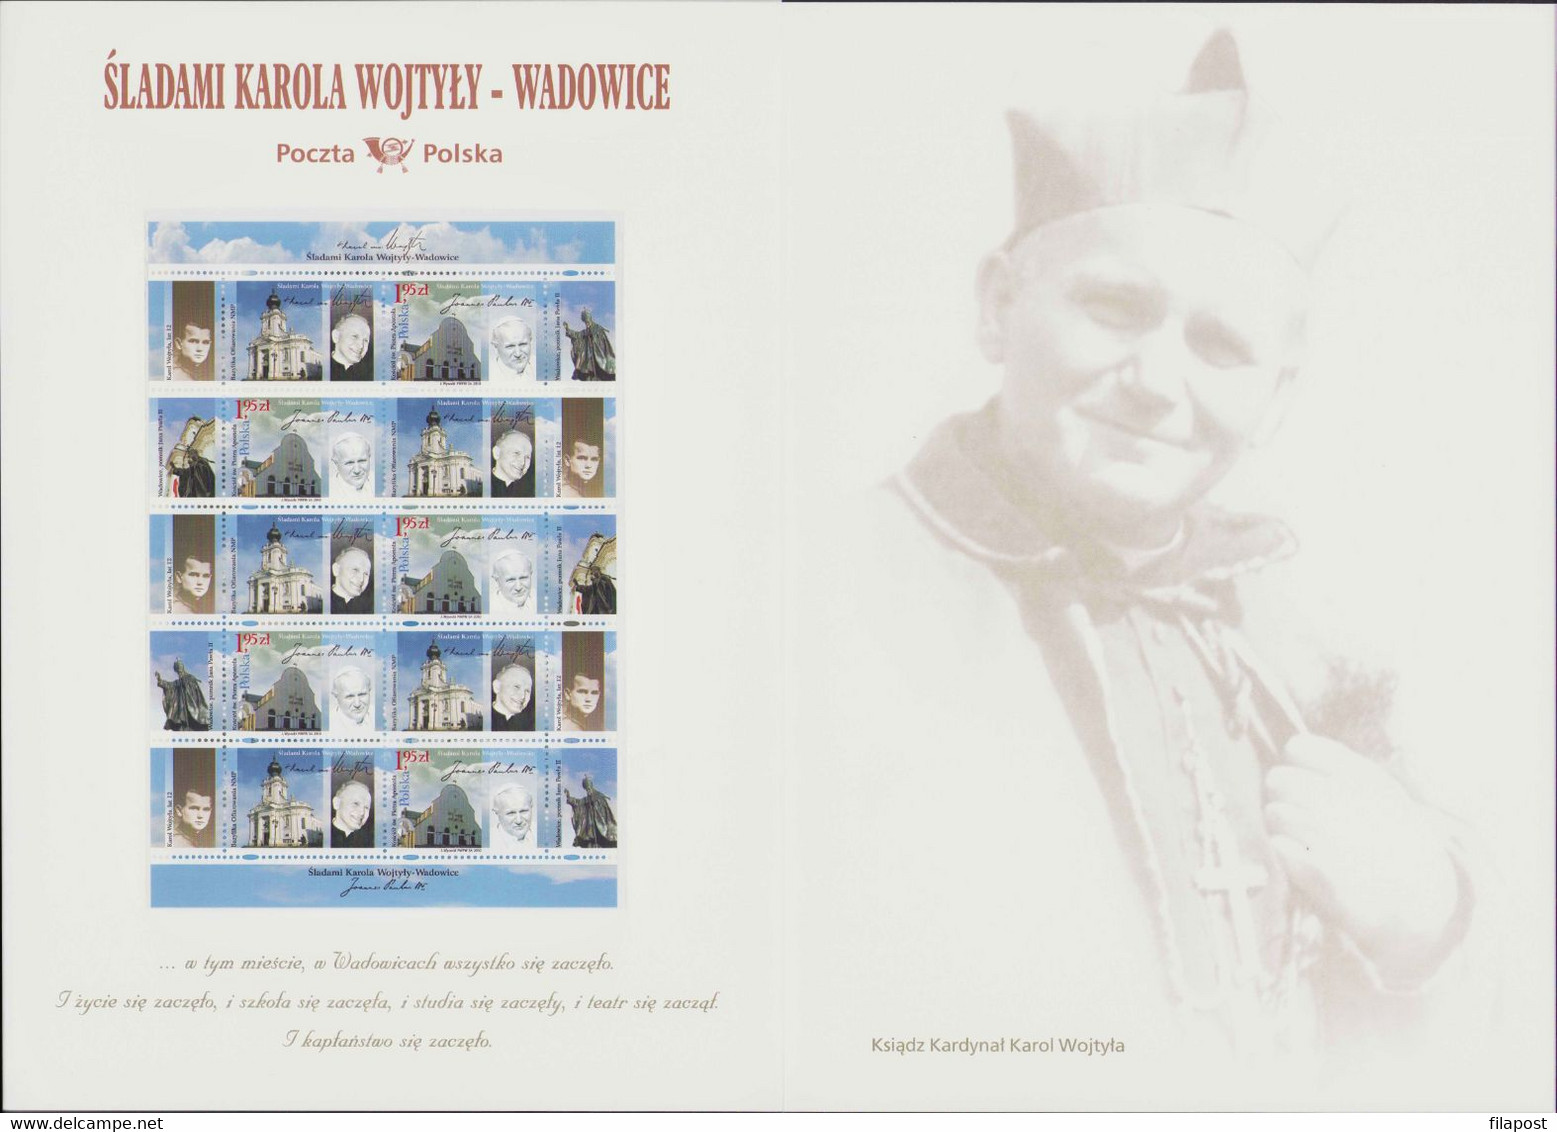 Poland 2010 Mi 4484 Souvenir Booklet / In The Steps Of Karol Wojtyla - Wadowice, Pope John Paul II / Full Sheet MNH**FV - Coil Stamps